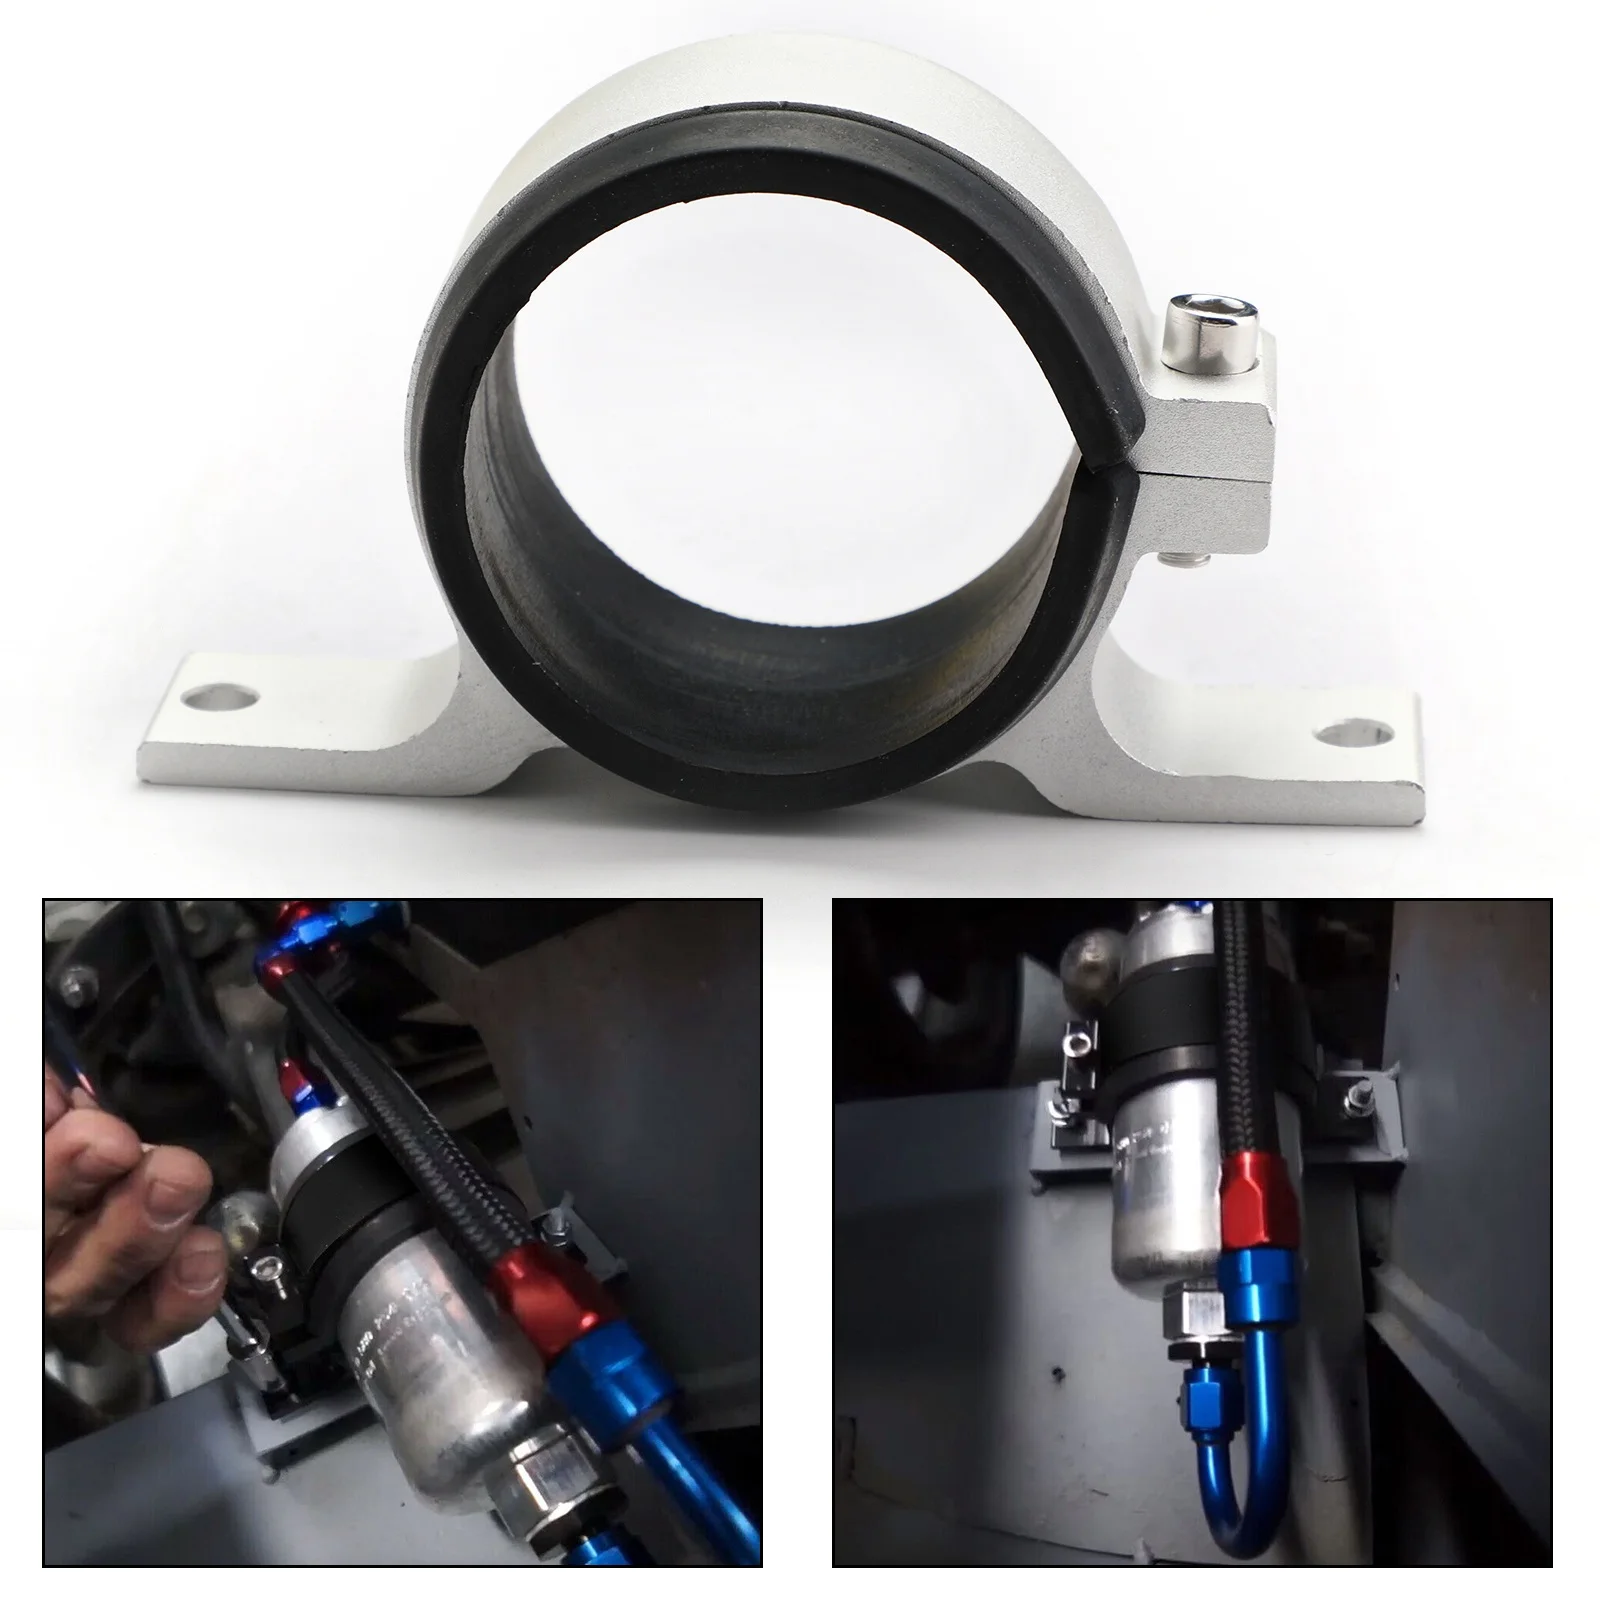 Details about   60mm Diameter Oil Fuel Pump Filter Bracket Mounting Clamp Holder Cradle w/ Screw